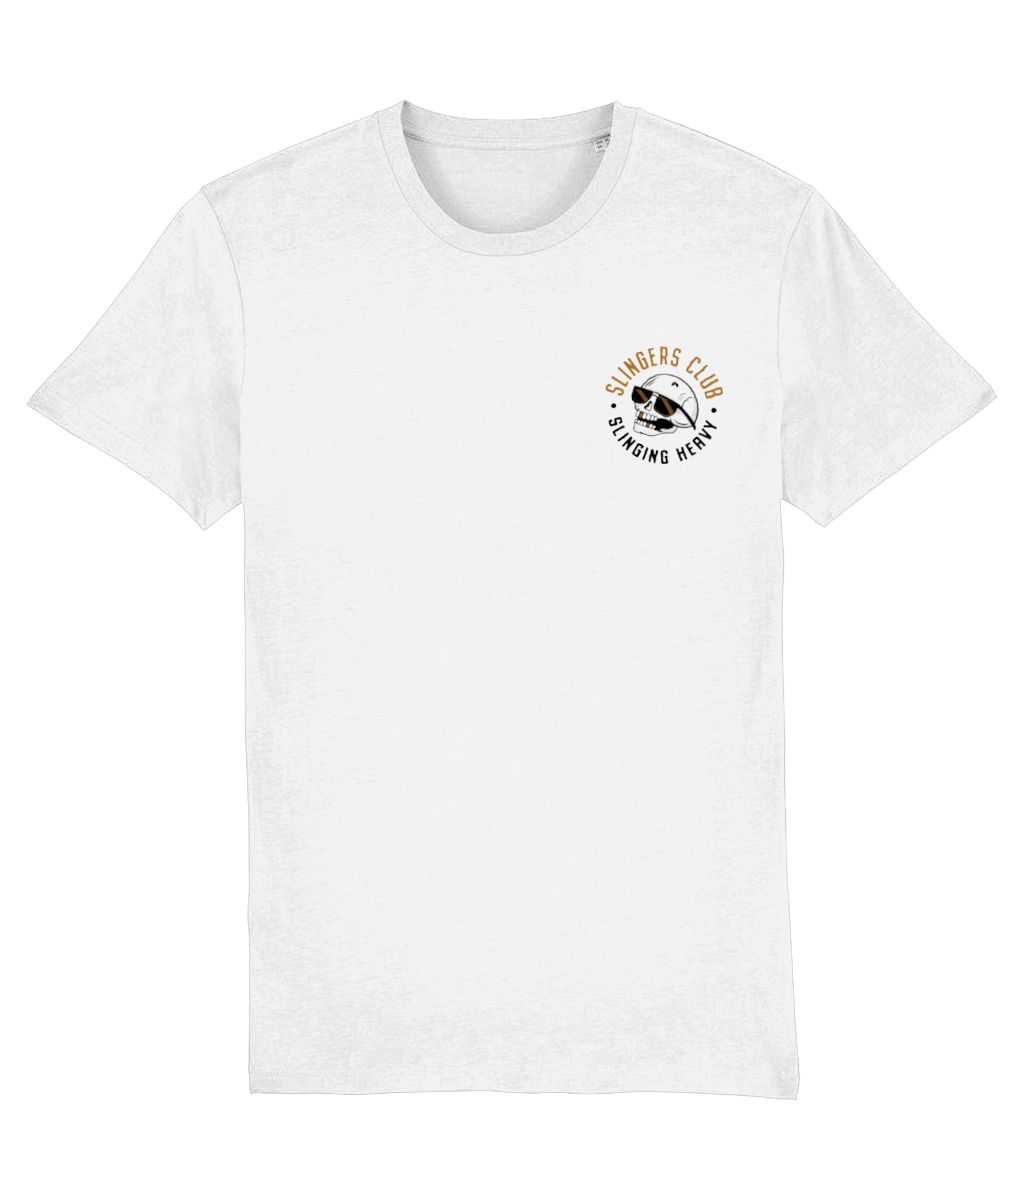 Successorize t-shirt - Slingers Club